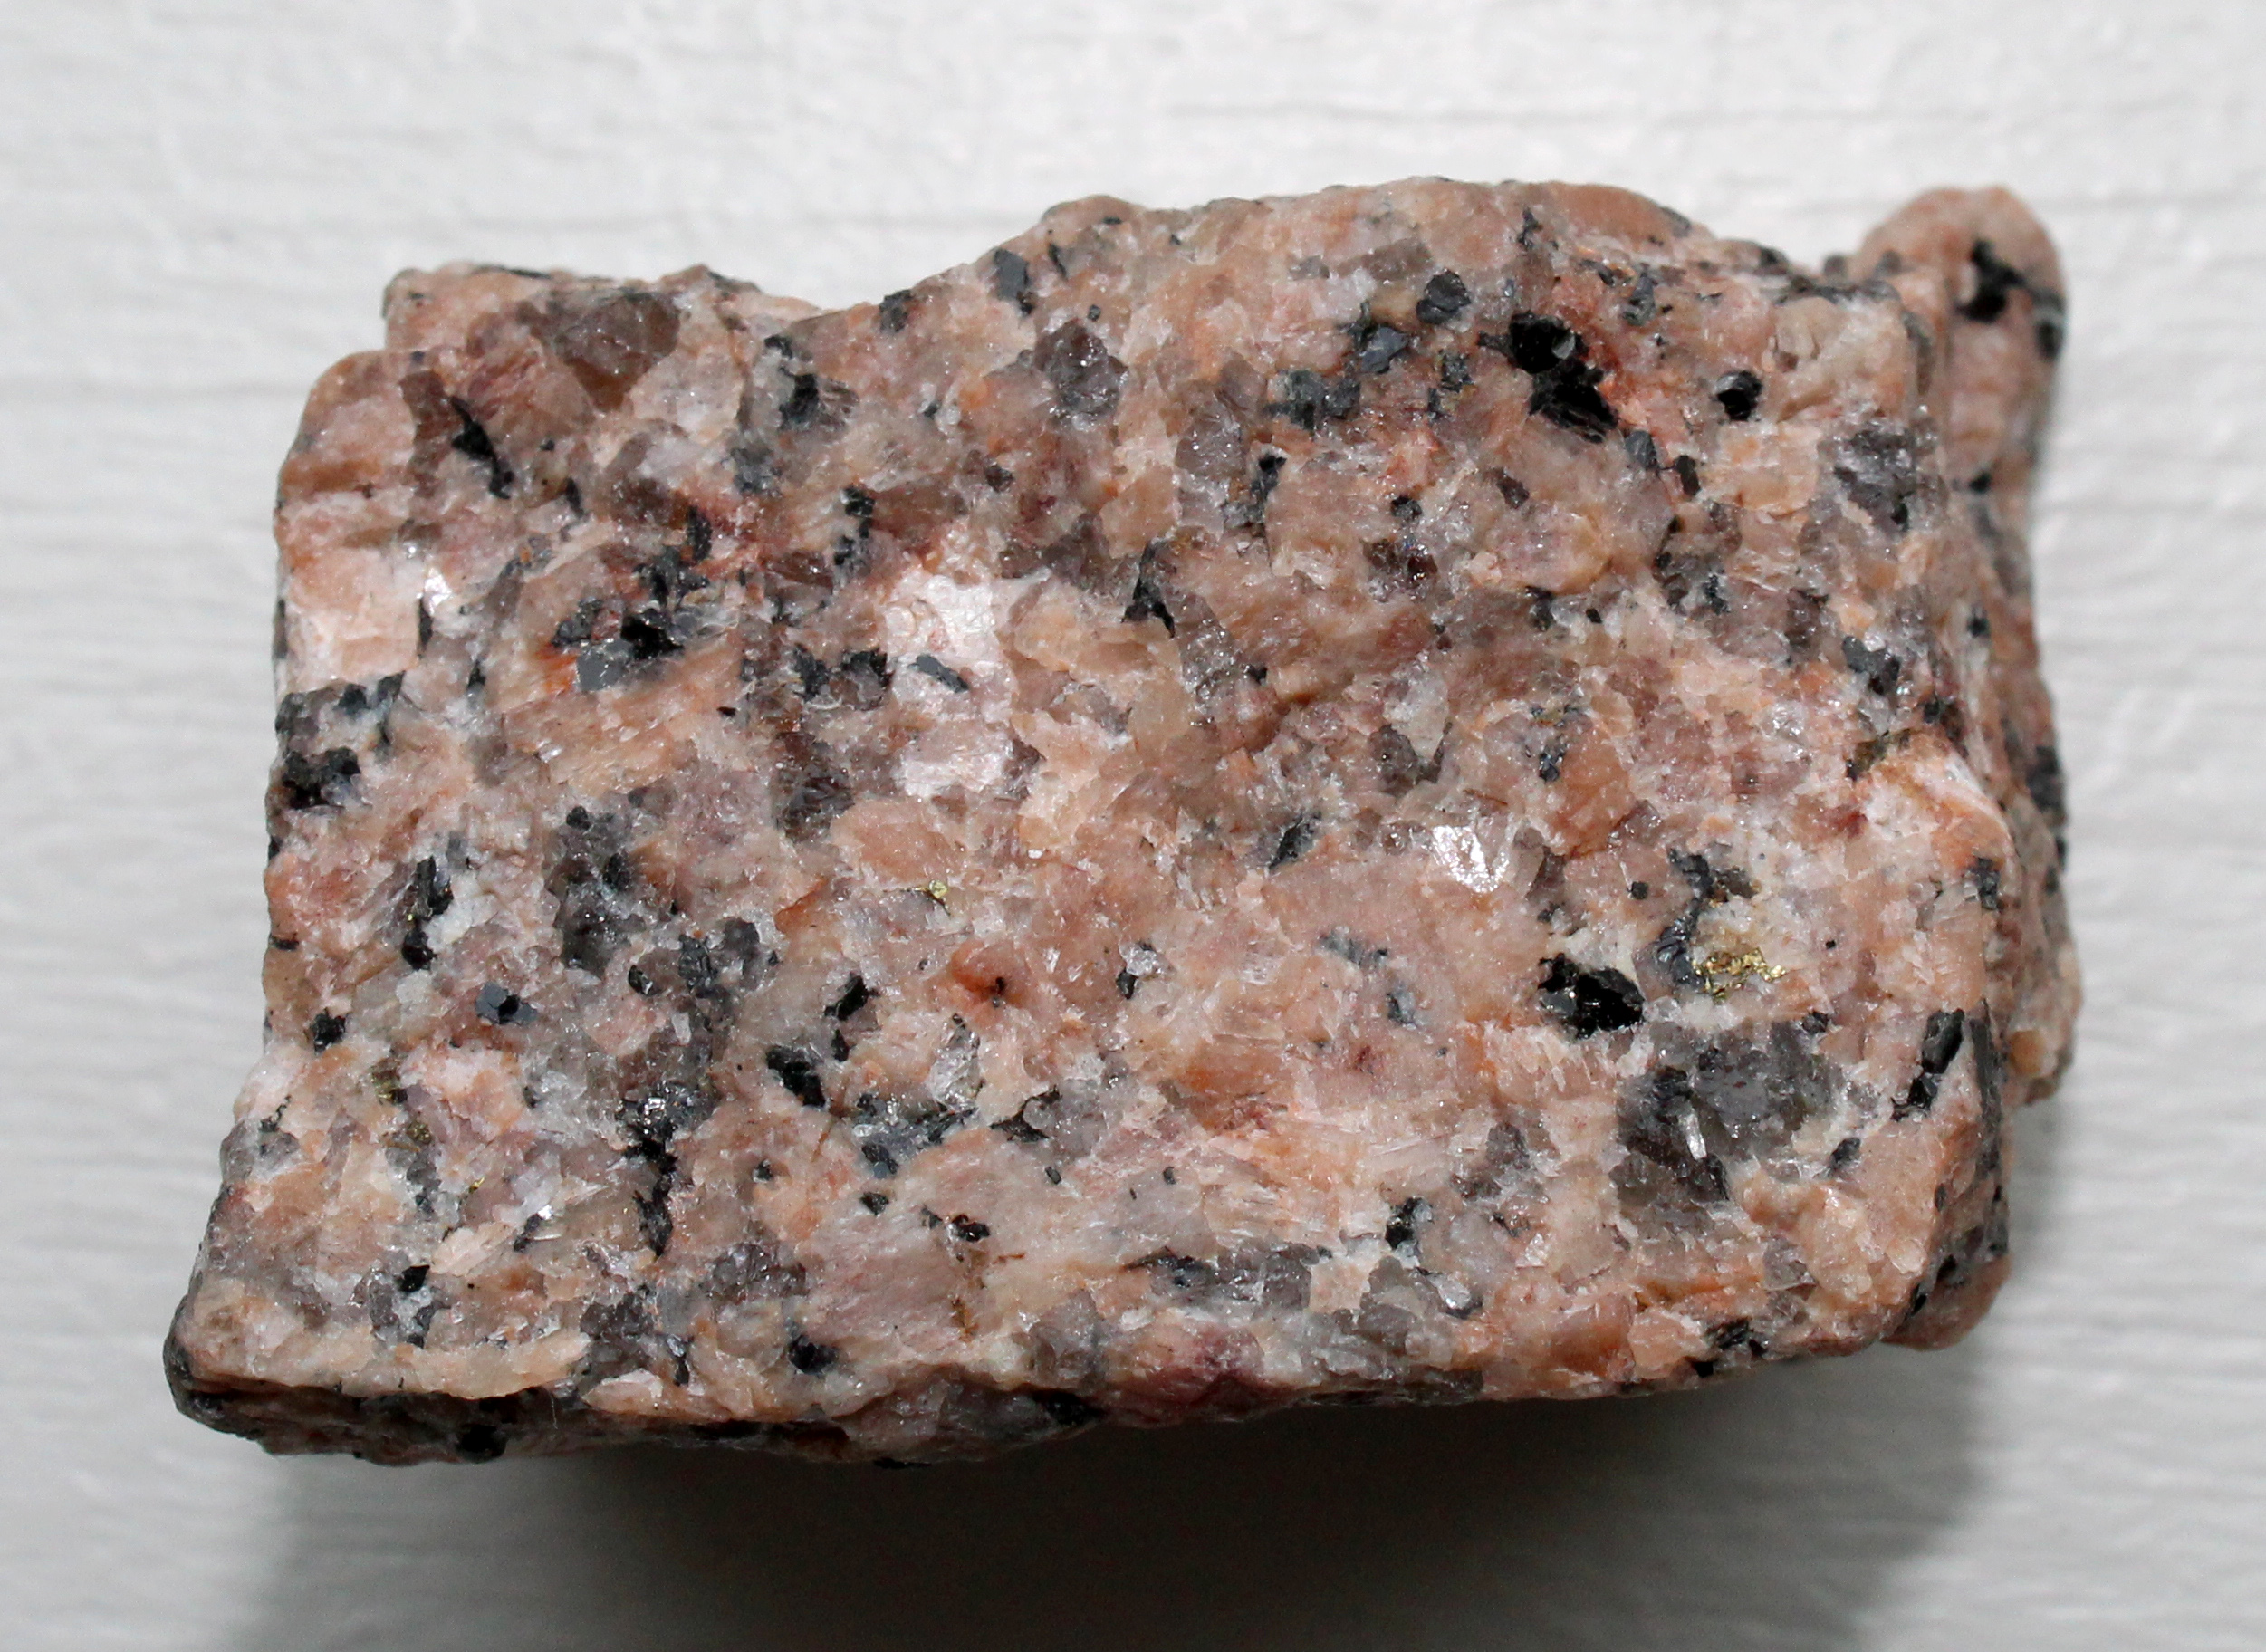 igneous rock identification